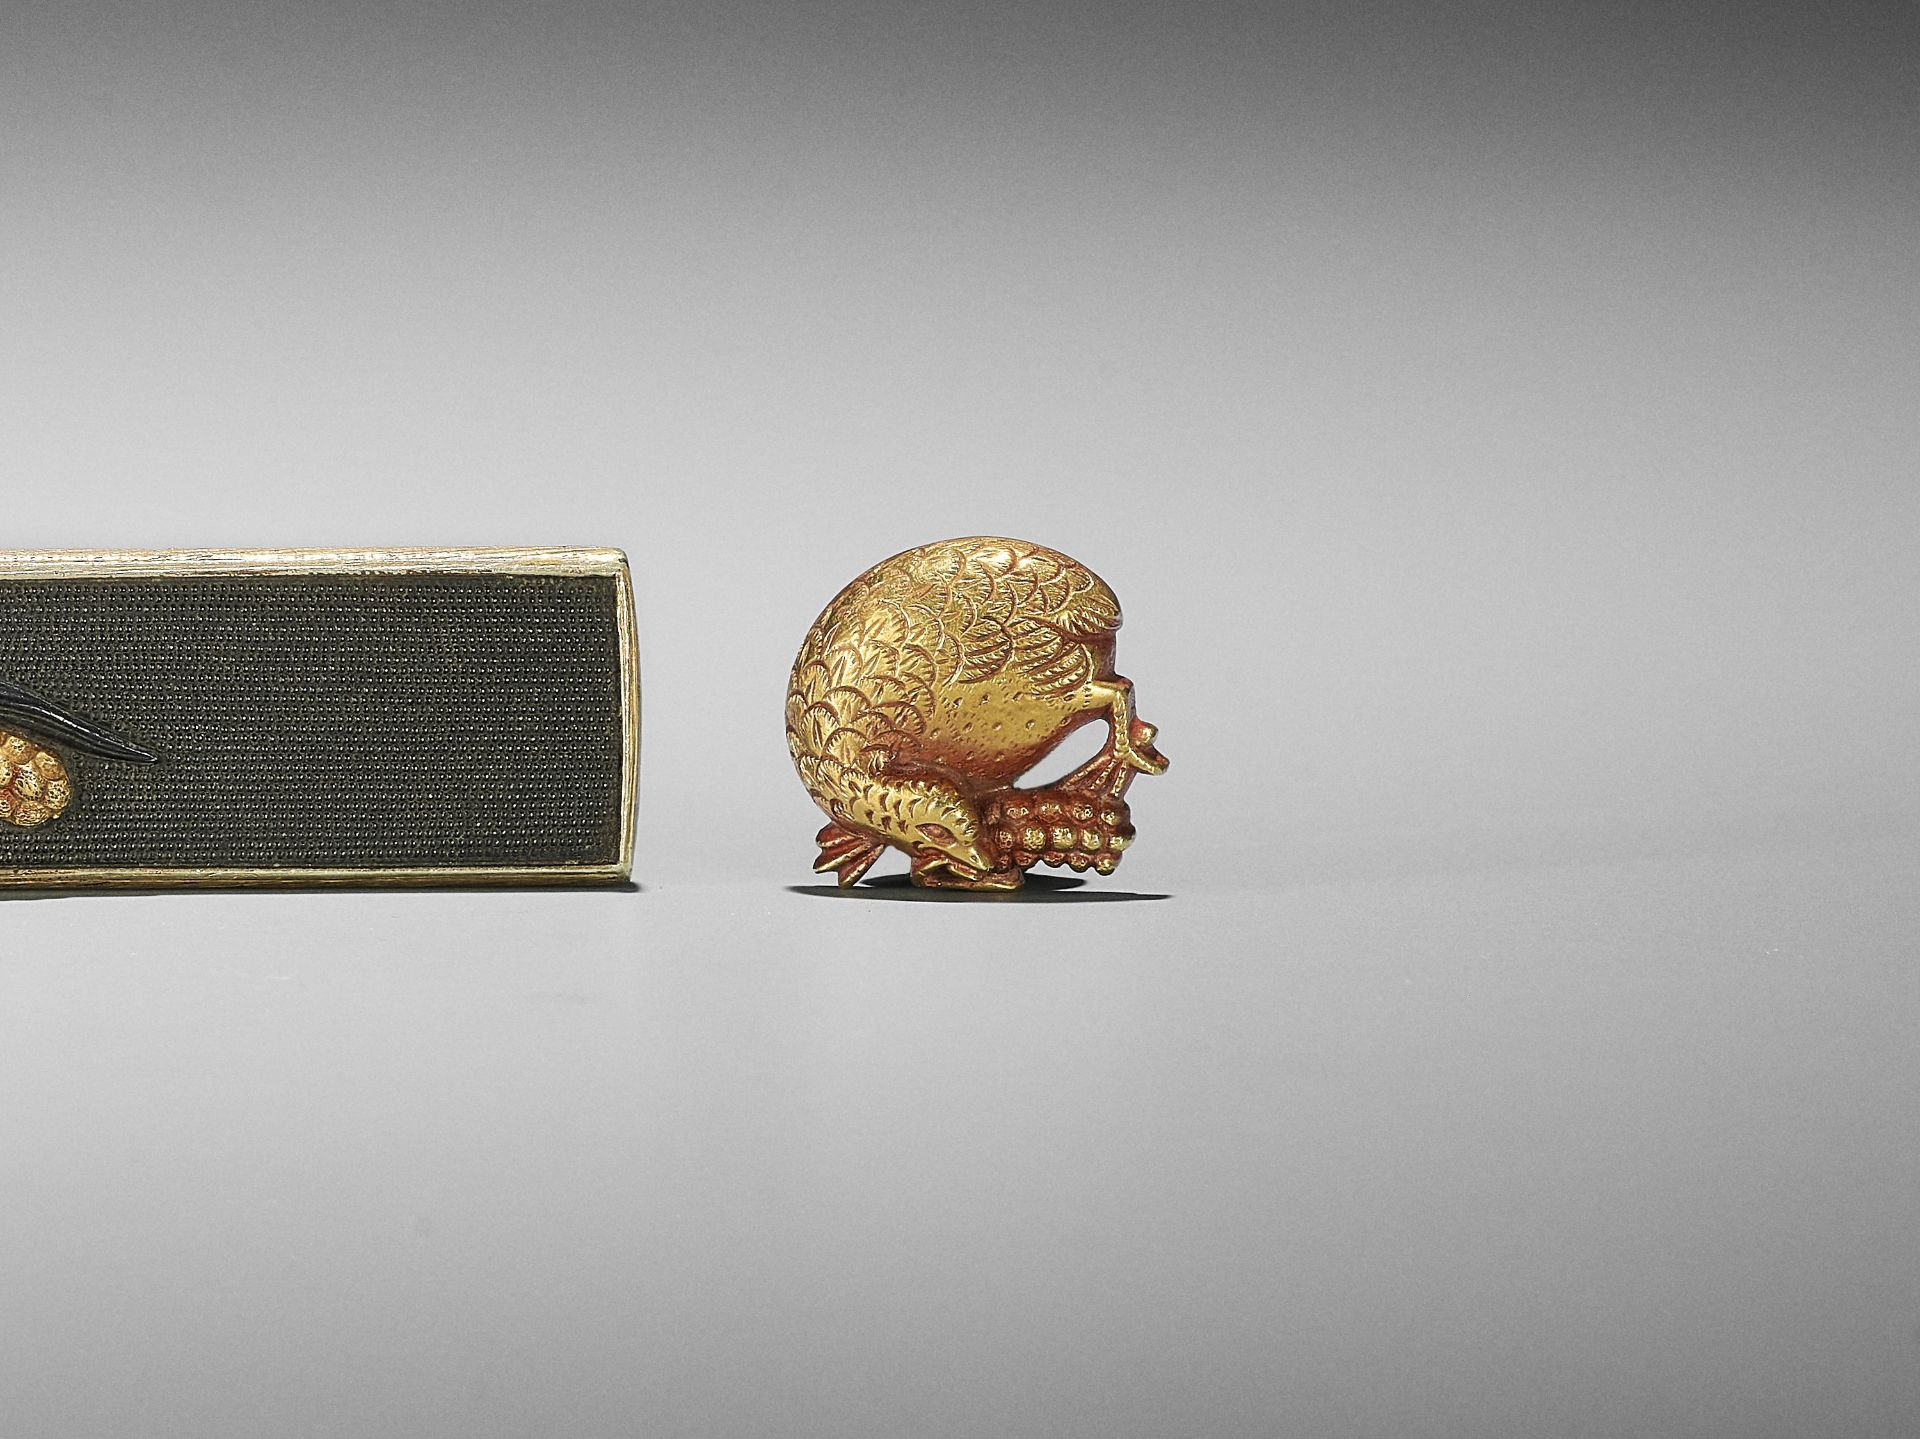 A RARE SET OF A KOZUKA AND MATCHING GOLD MENUKI PAIR DEPICTING QUAILS AND MILLET - Image 5 of 8